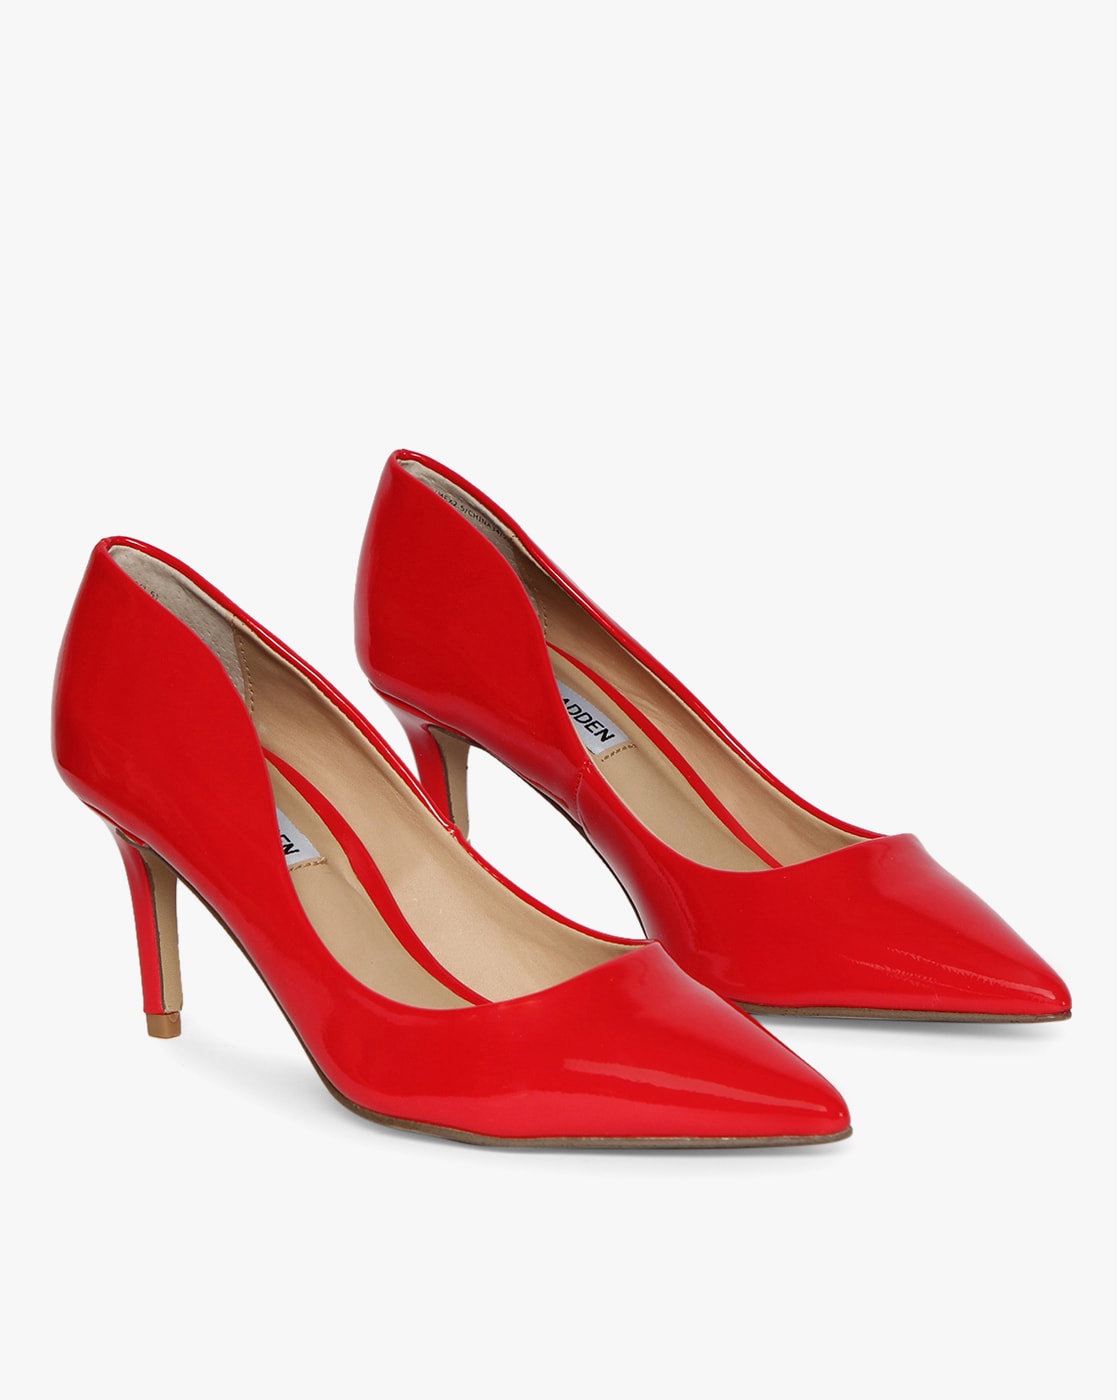 steve madden red and black heels